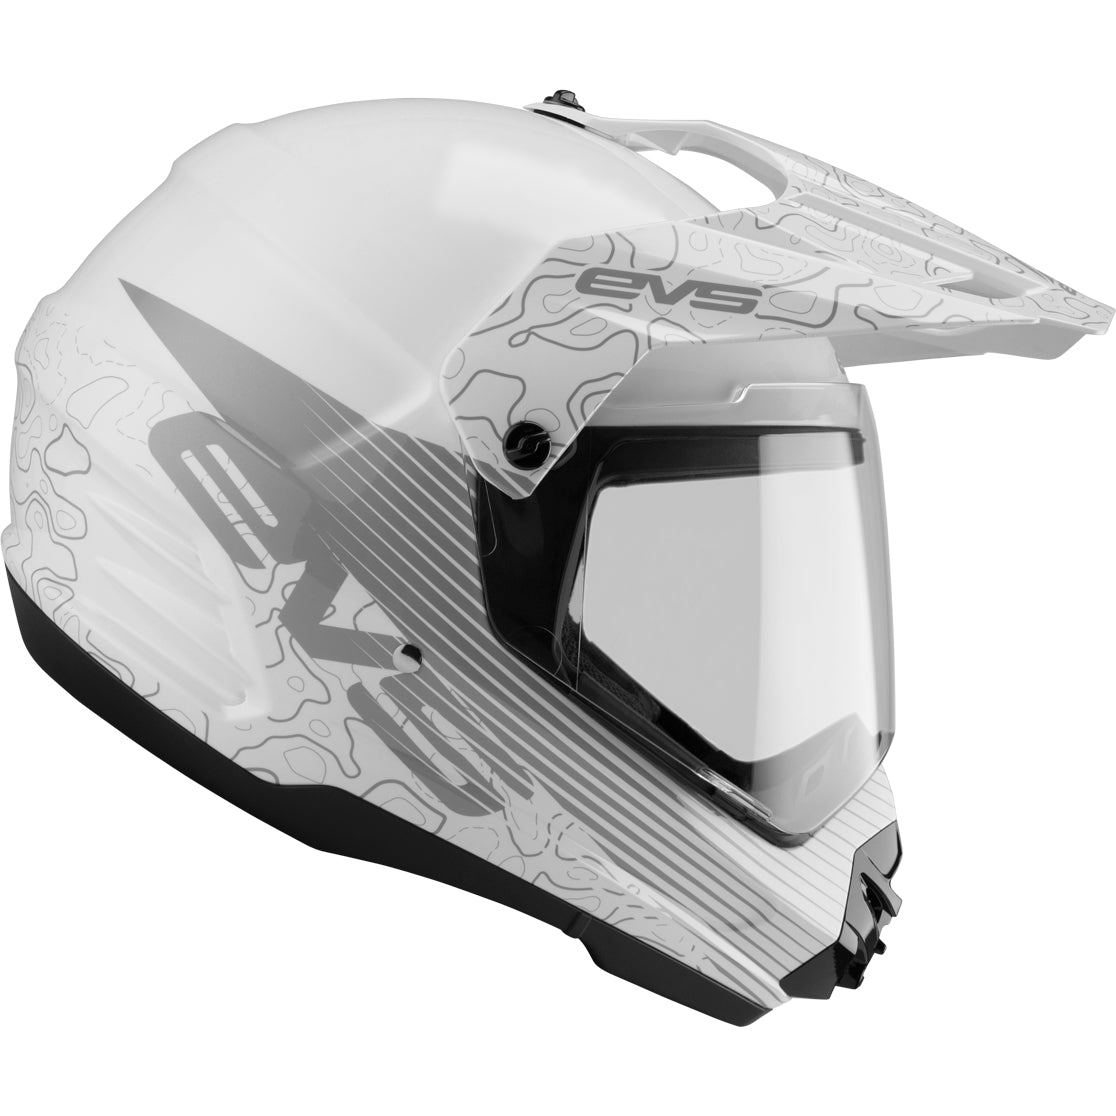 T5 Dual Sport Helmet - Venture Arise White - EVS Sports